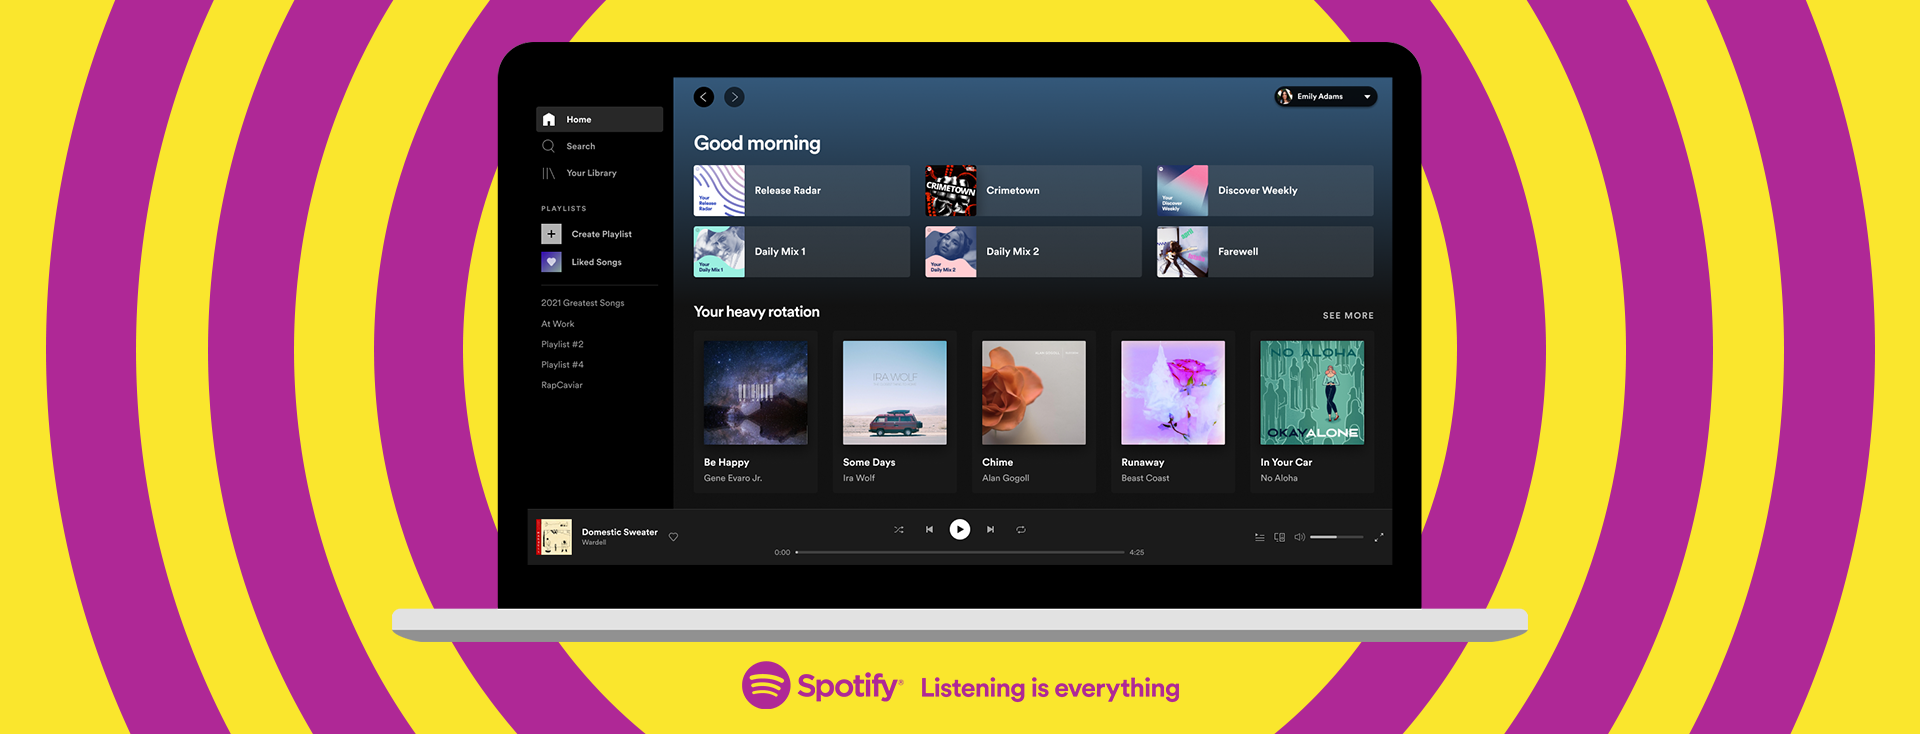 Spotify Rolls Out New Web & Desktop Interface